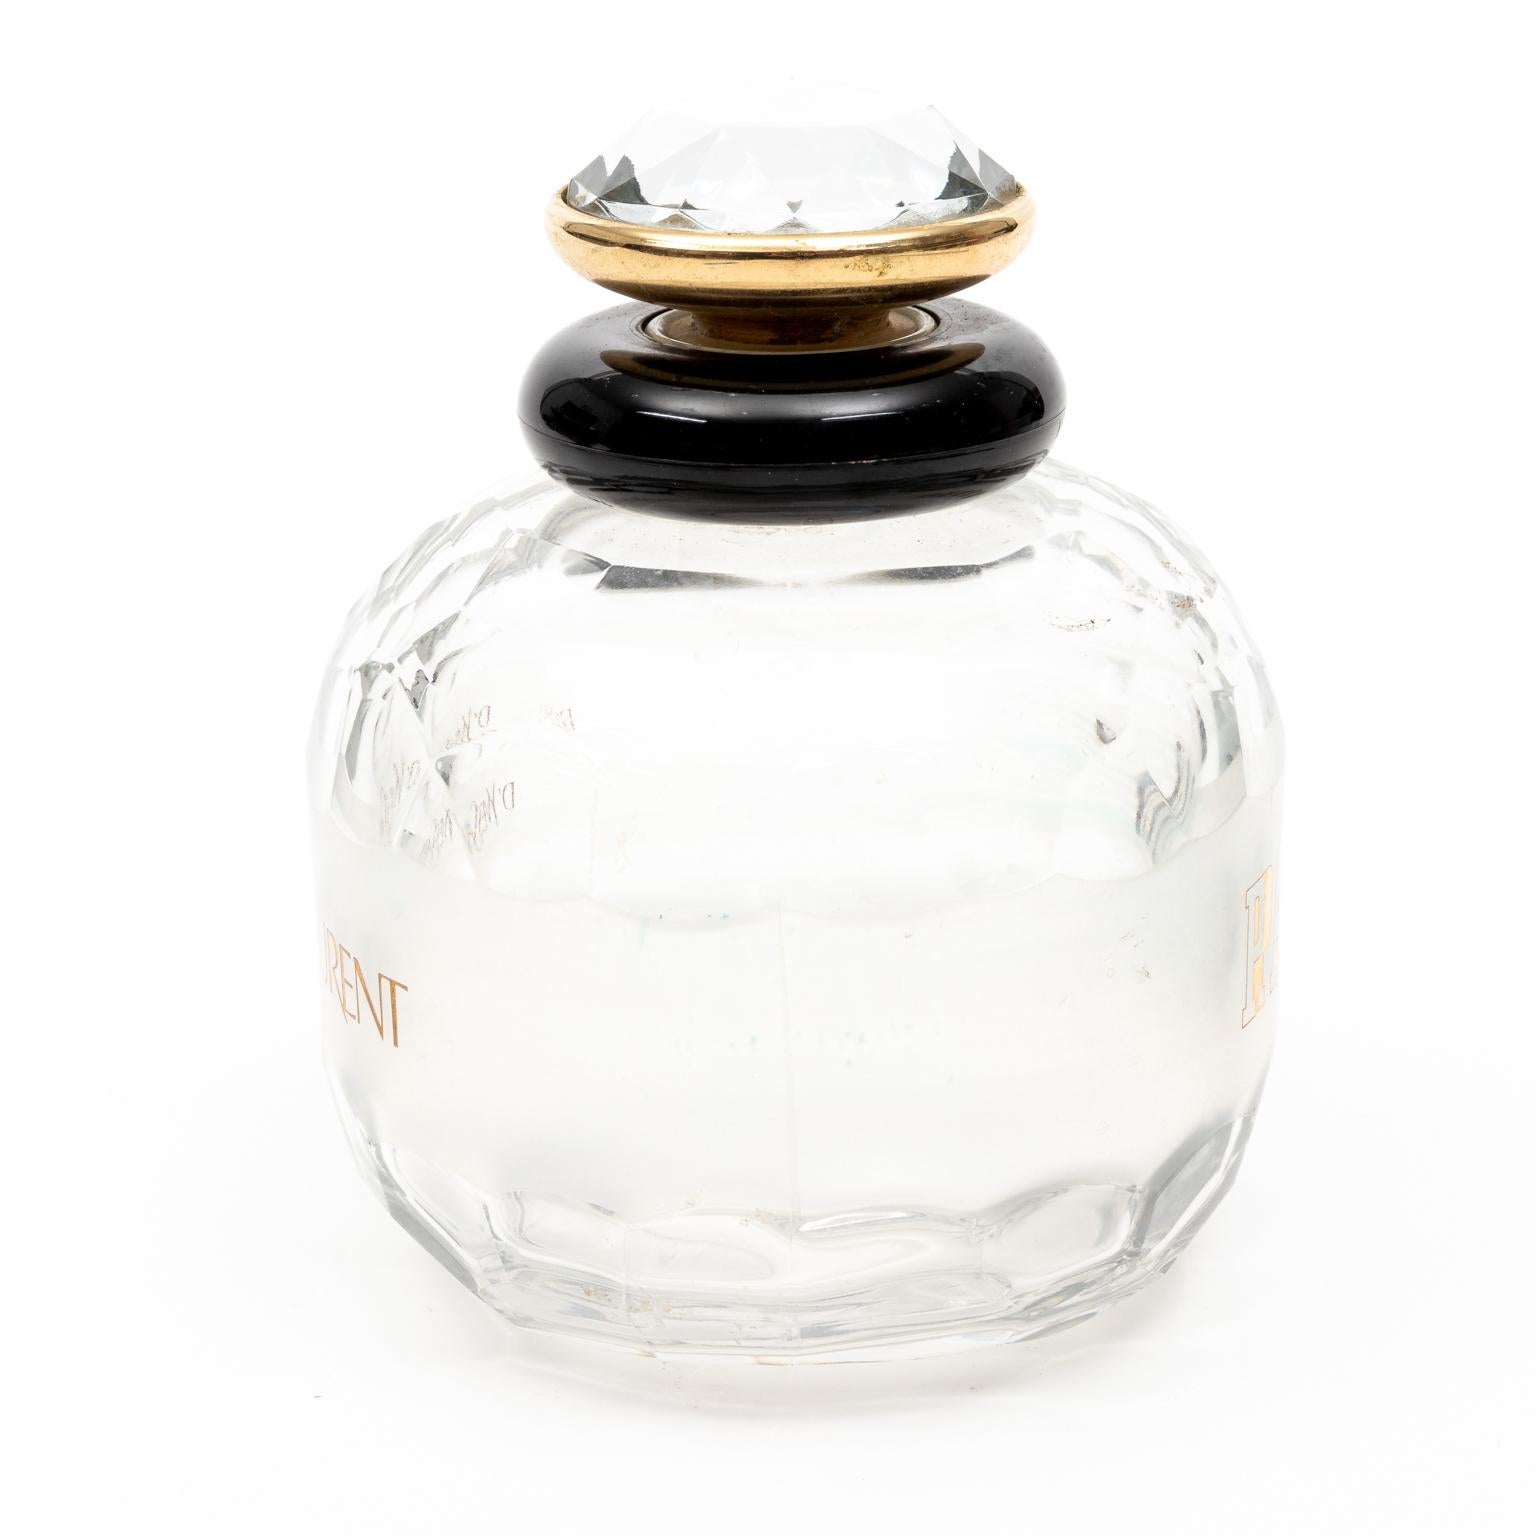 Yves Saint Laurent Paris Factice Perfume Bottle Store Display 1